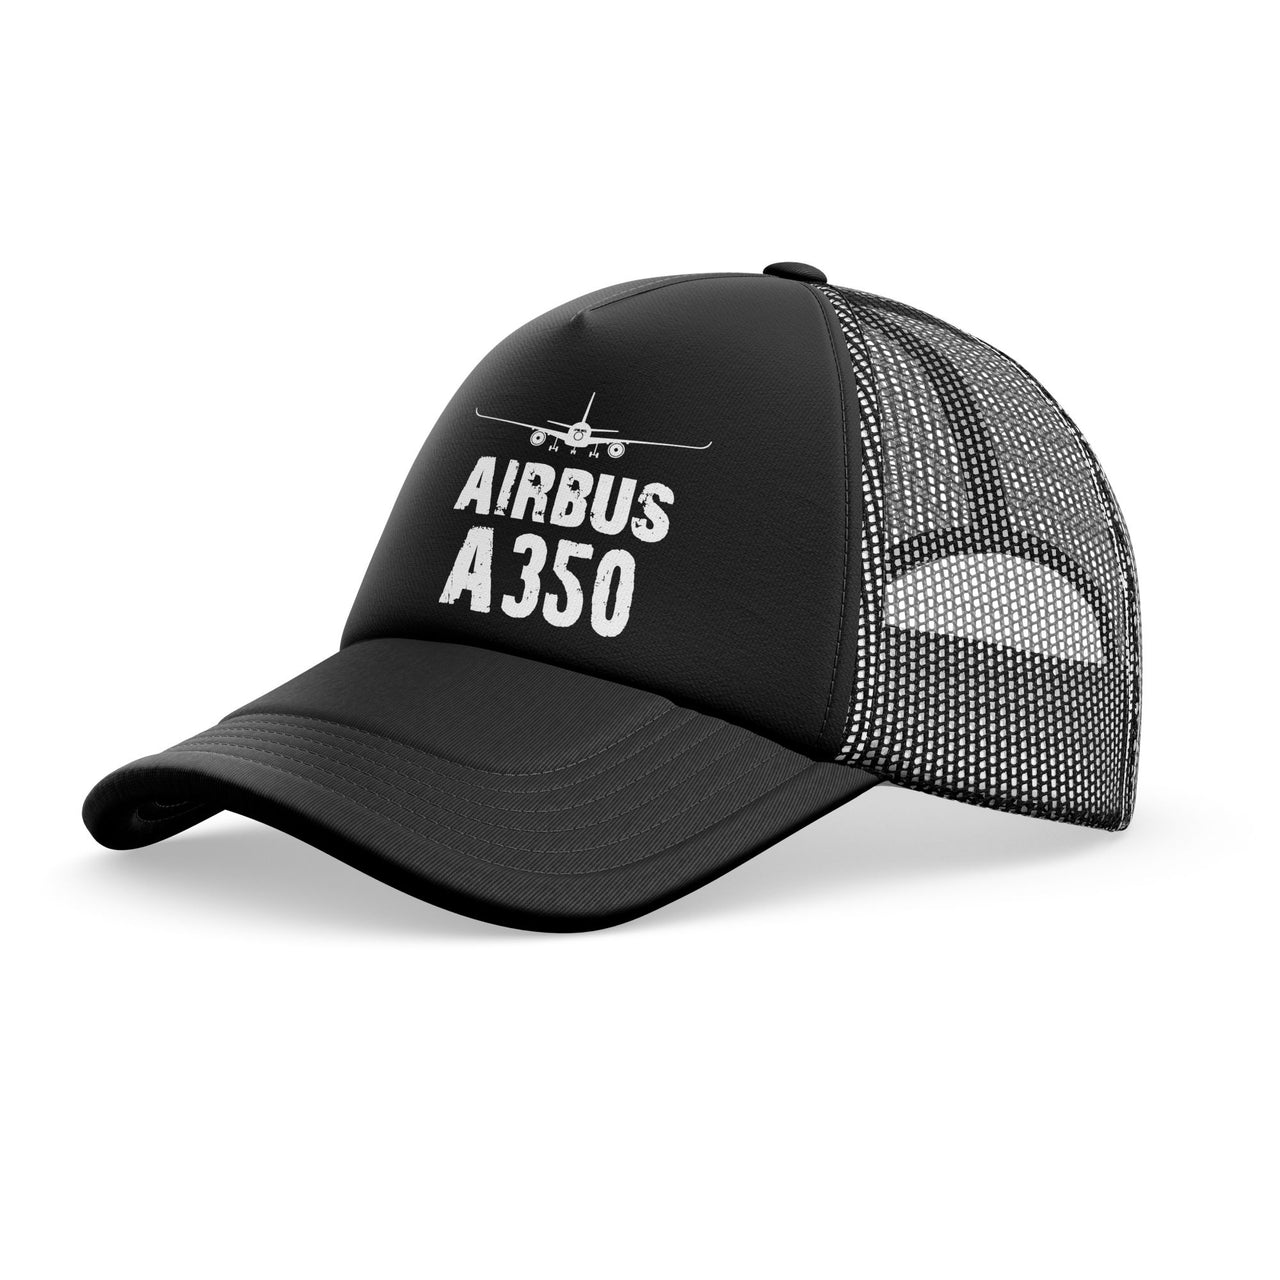 Airbus A350 & Plane Designed Trucker Caps & Hats